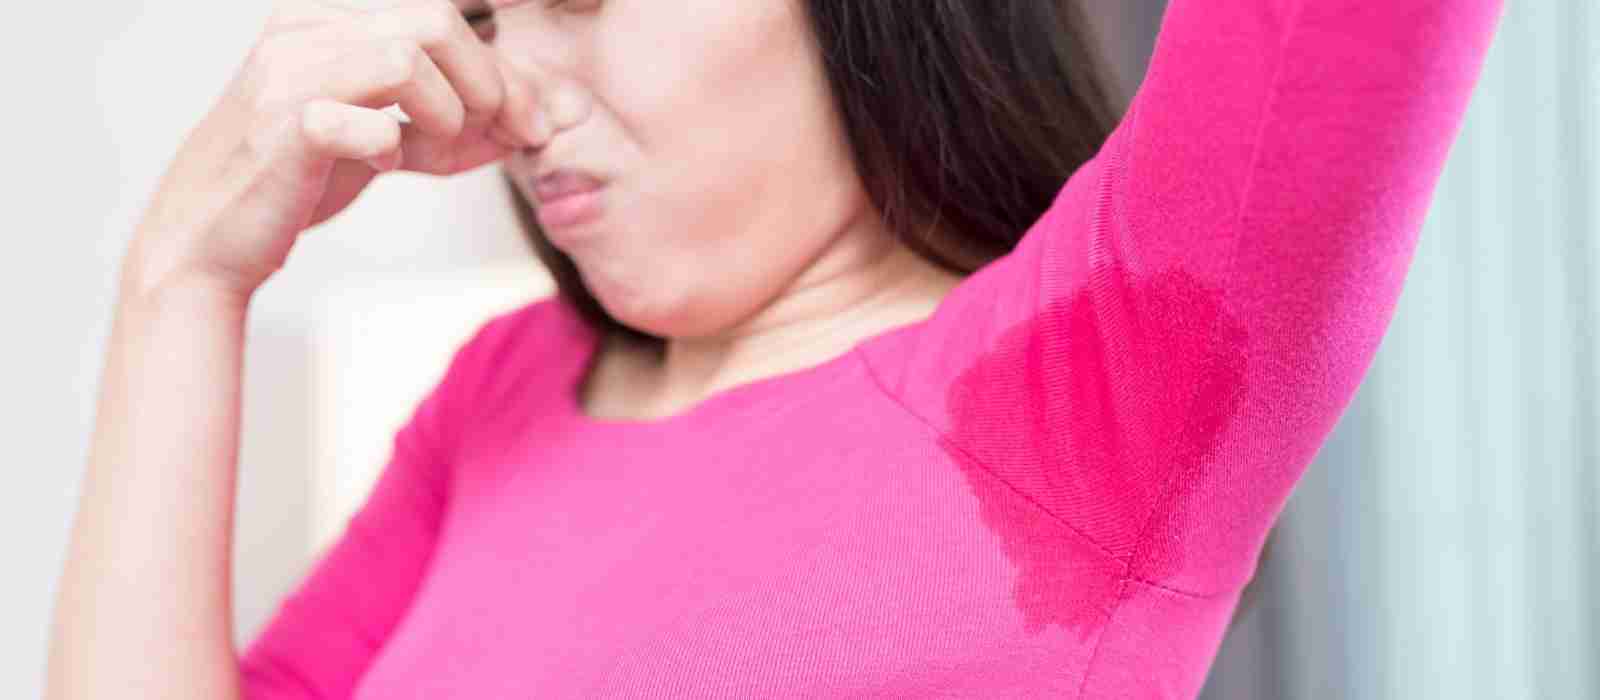 Body Odor While Breastfeeding